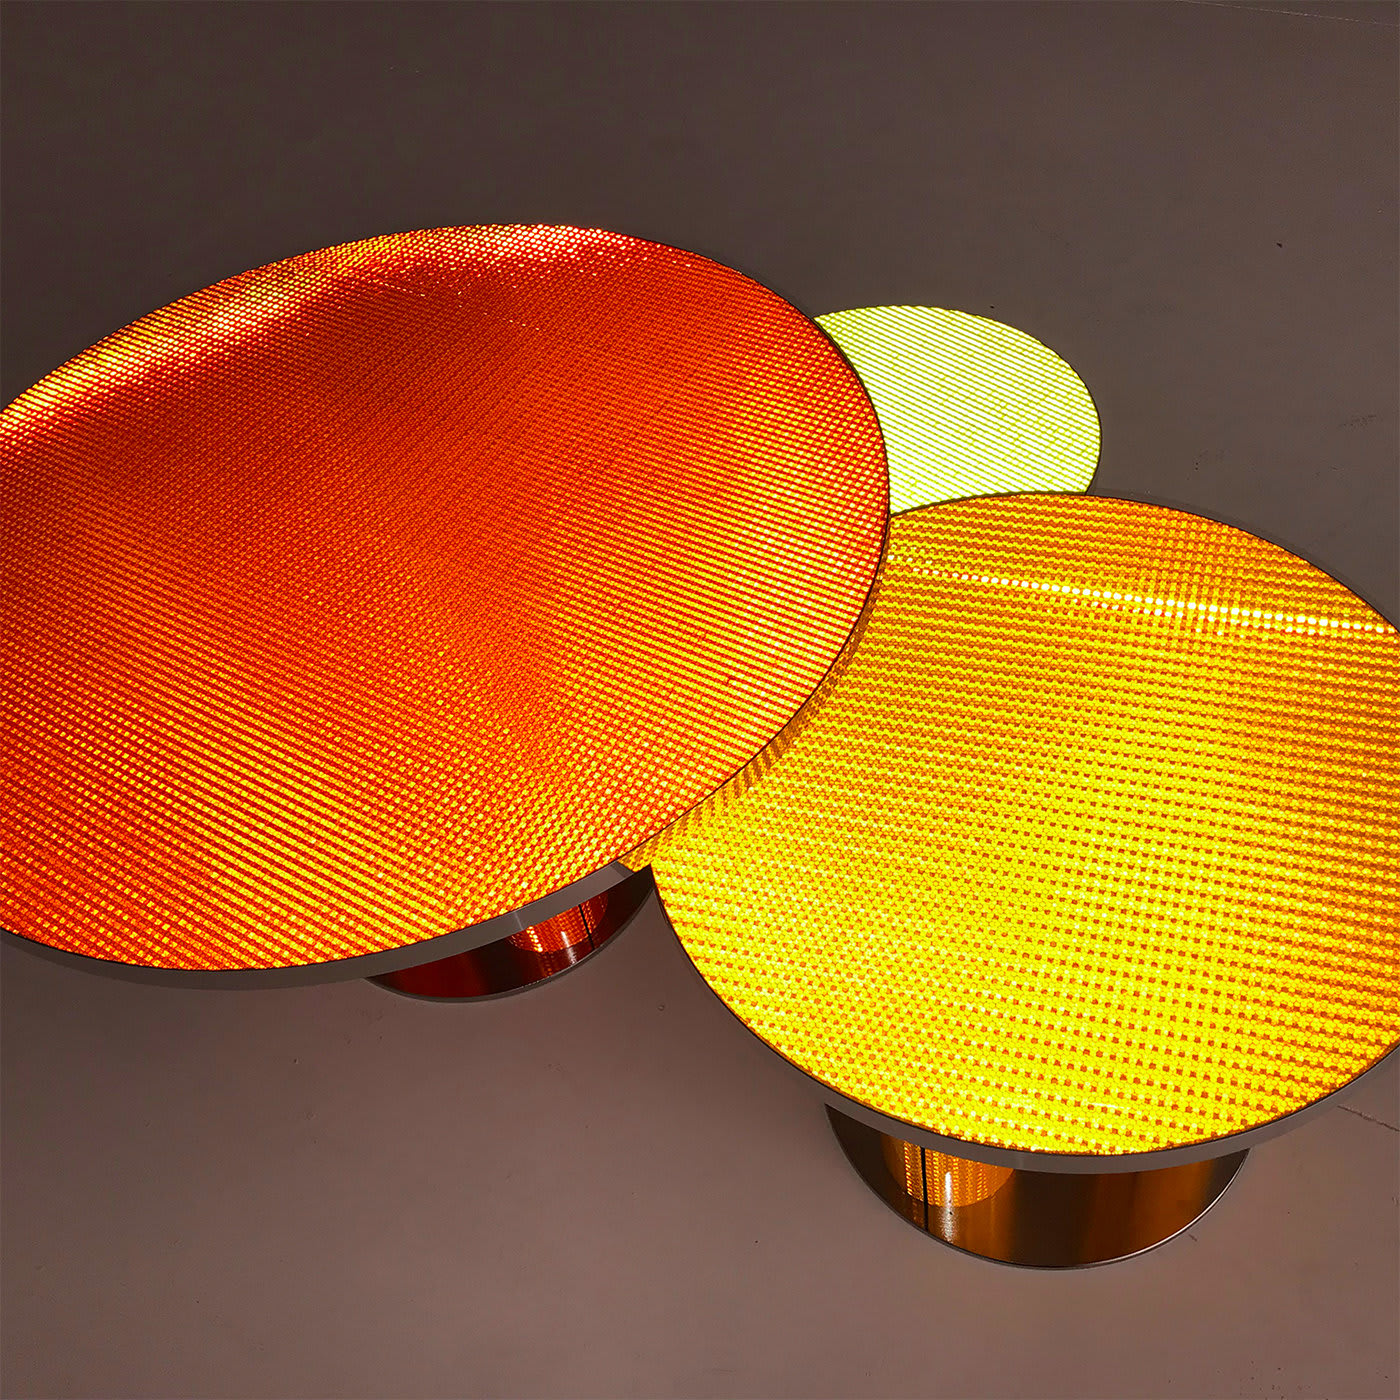 Reflective Collection - Red round coffee table - Sebastiano Bottos